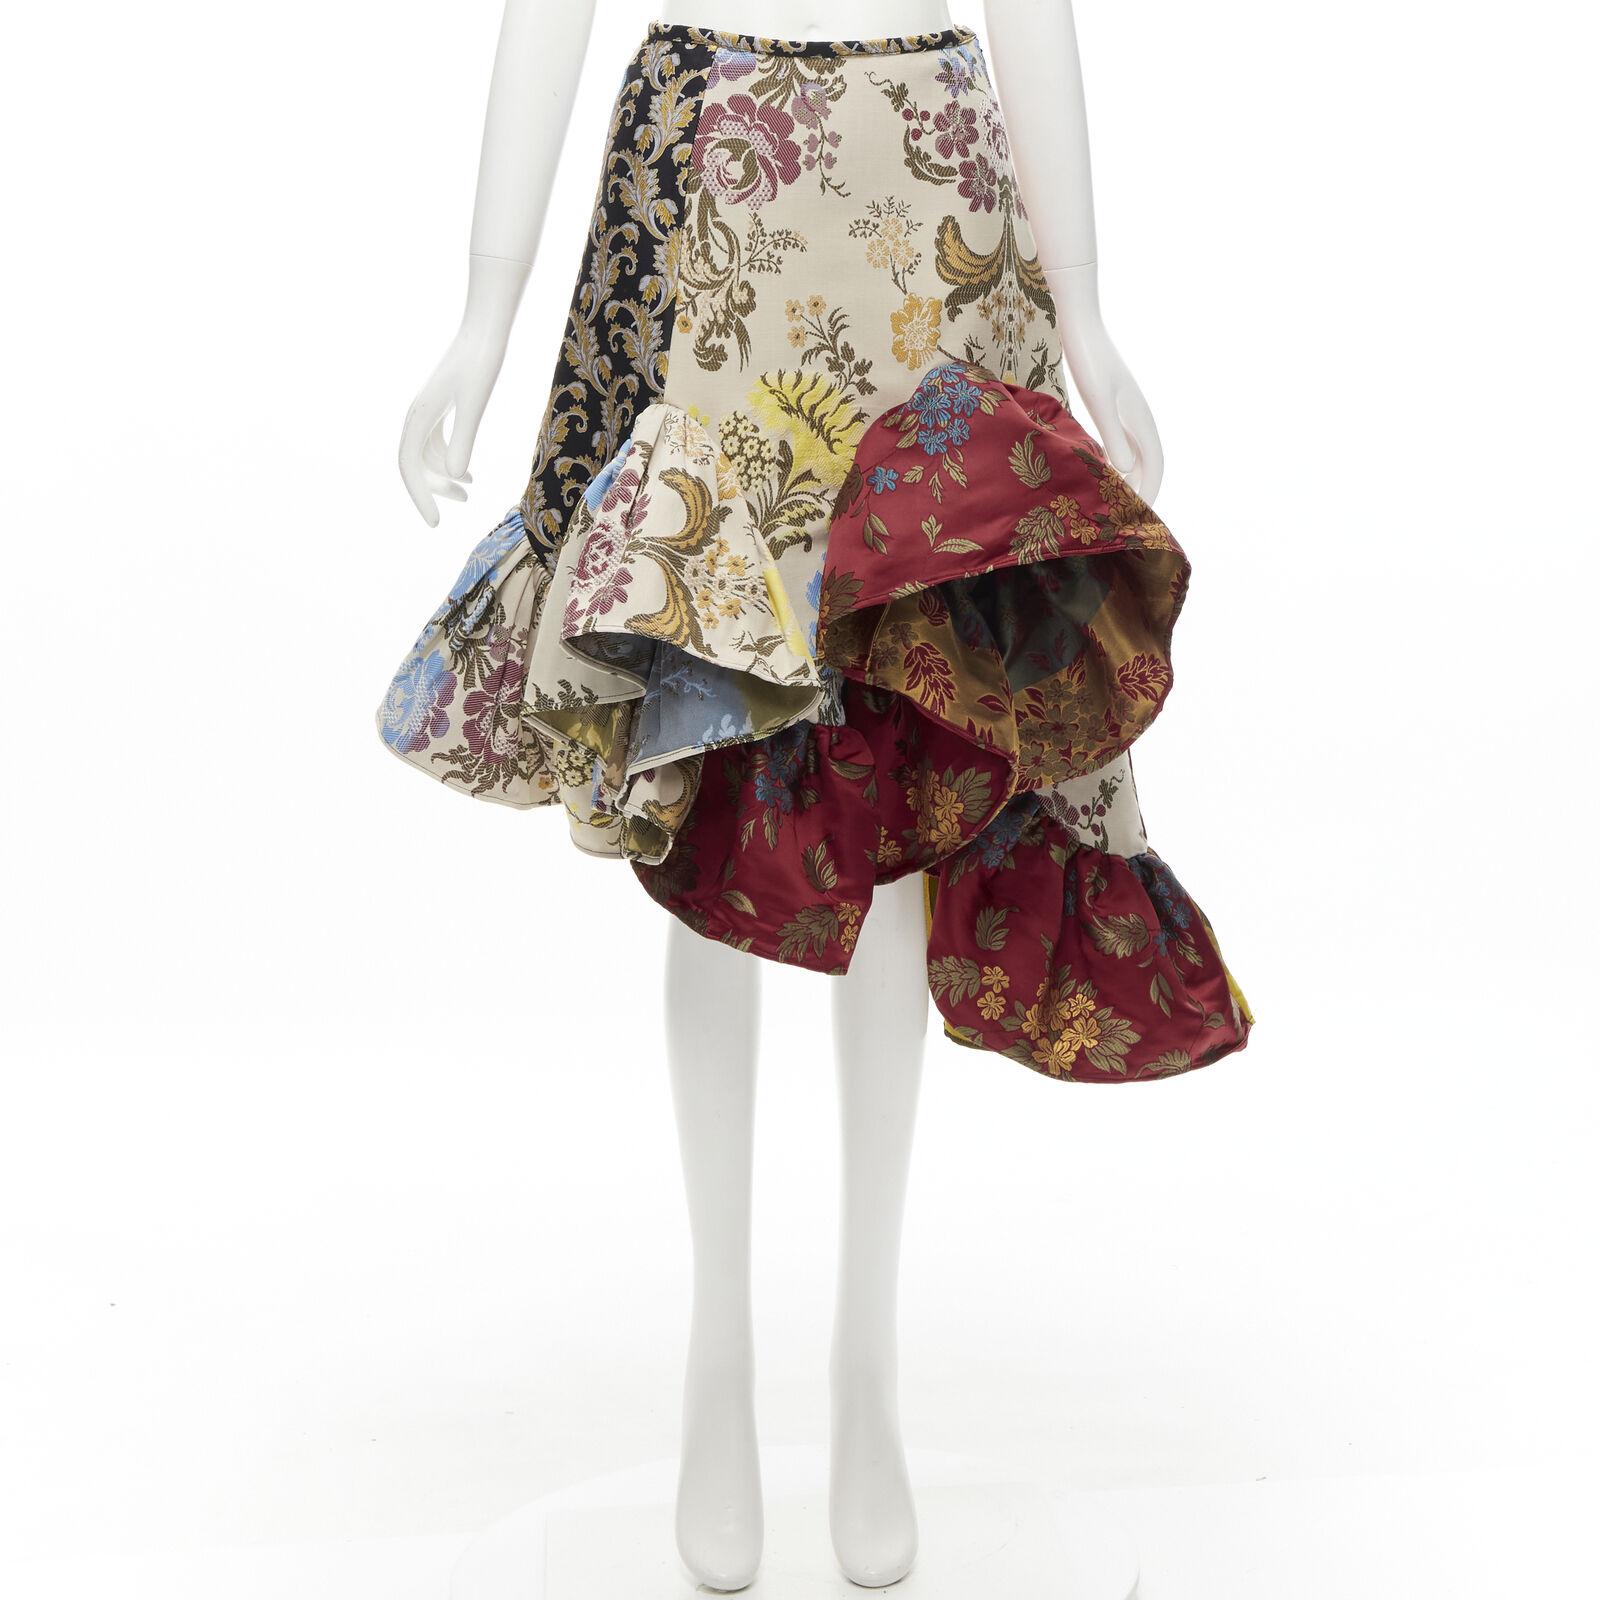 MARQUES ALMEIDA Net Sustain Remade 2020 patchwork brocade ruffled skirt UK6 XS 4